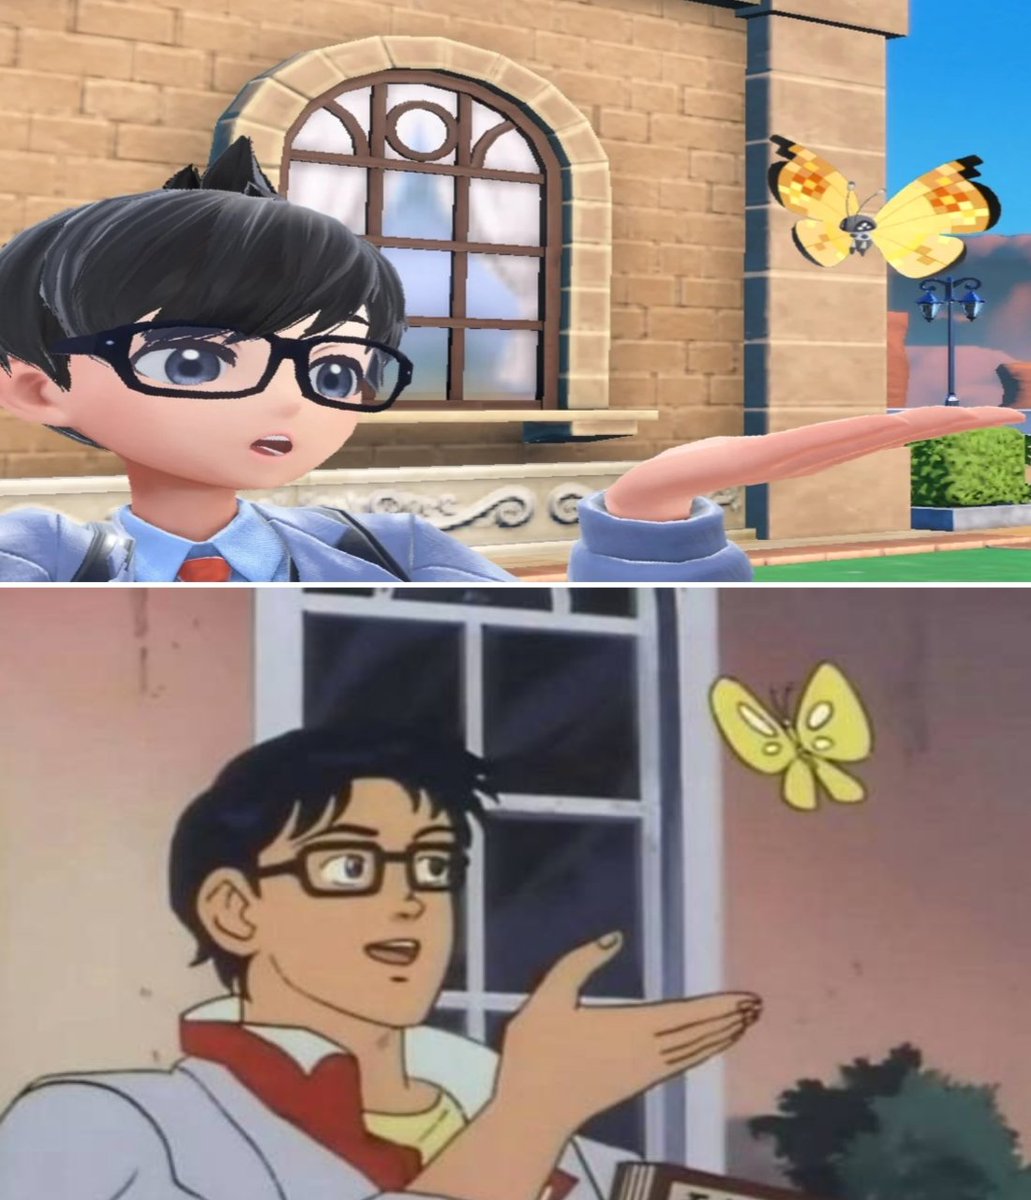 Buy Anime Butterfly Guy Meme Sticker Online in India  Etsy